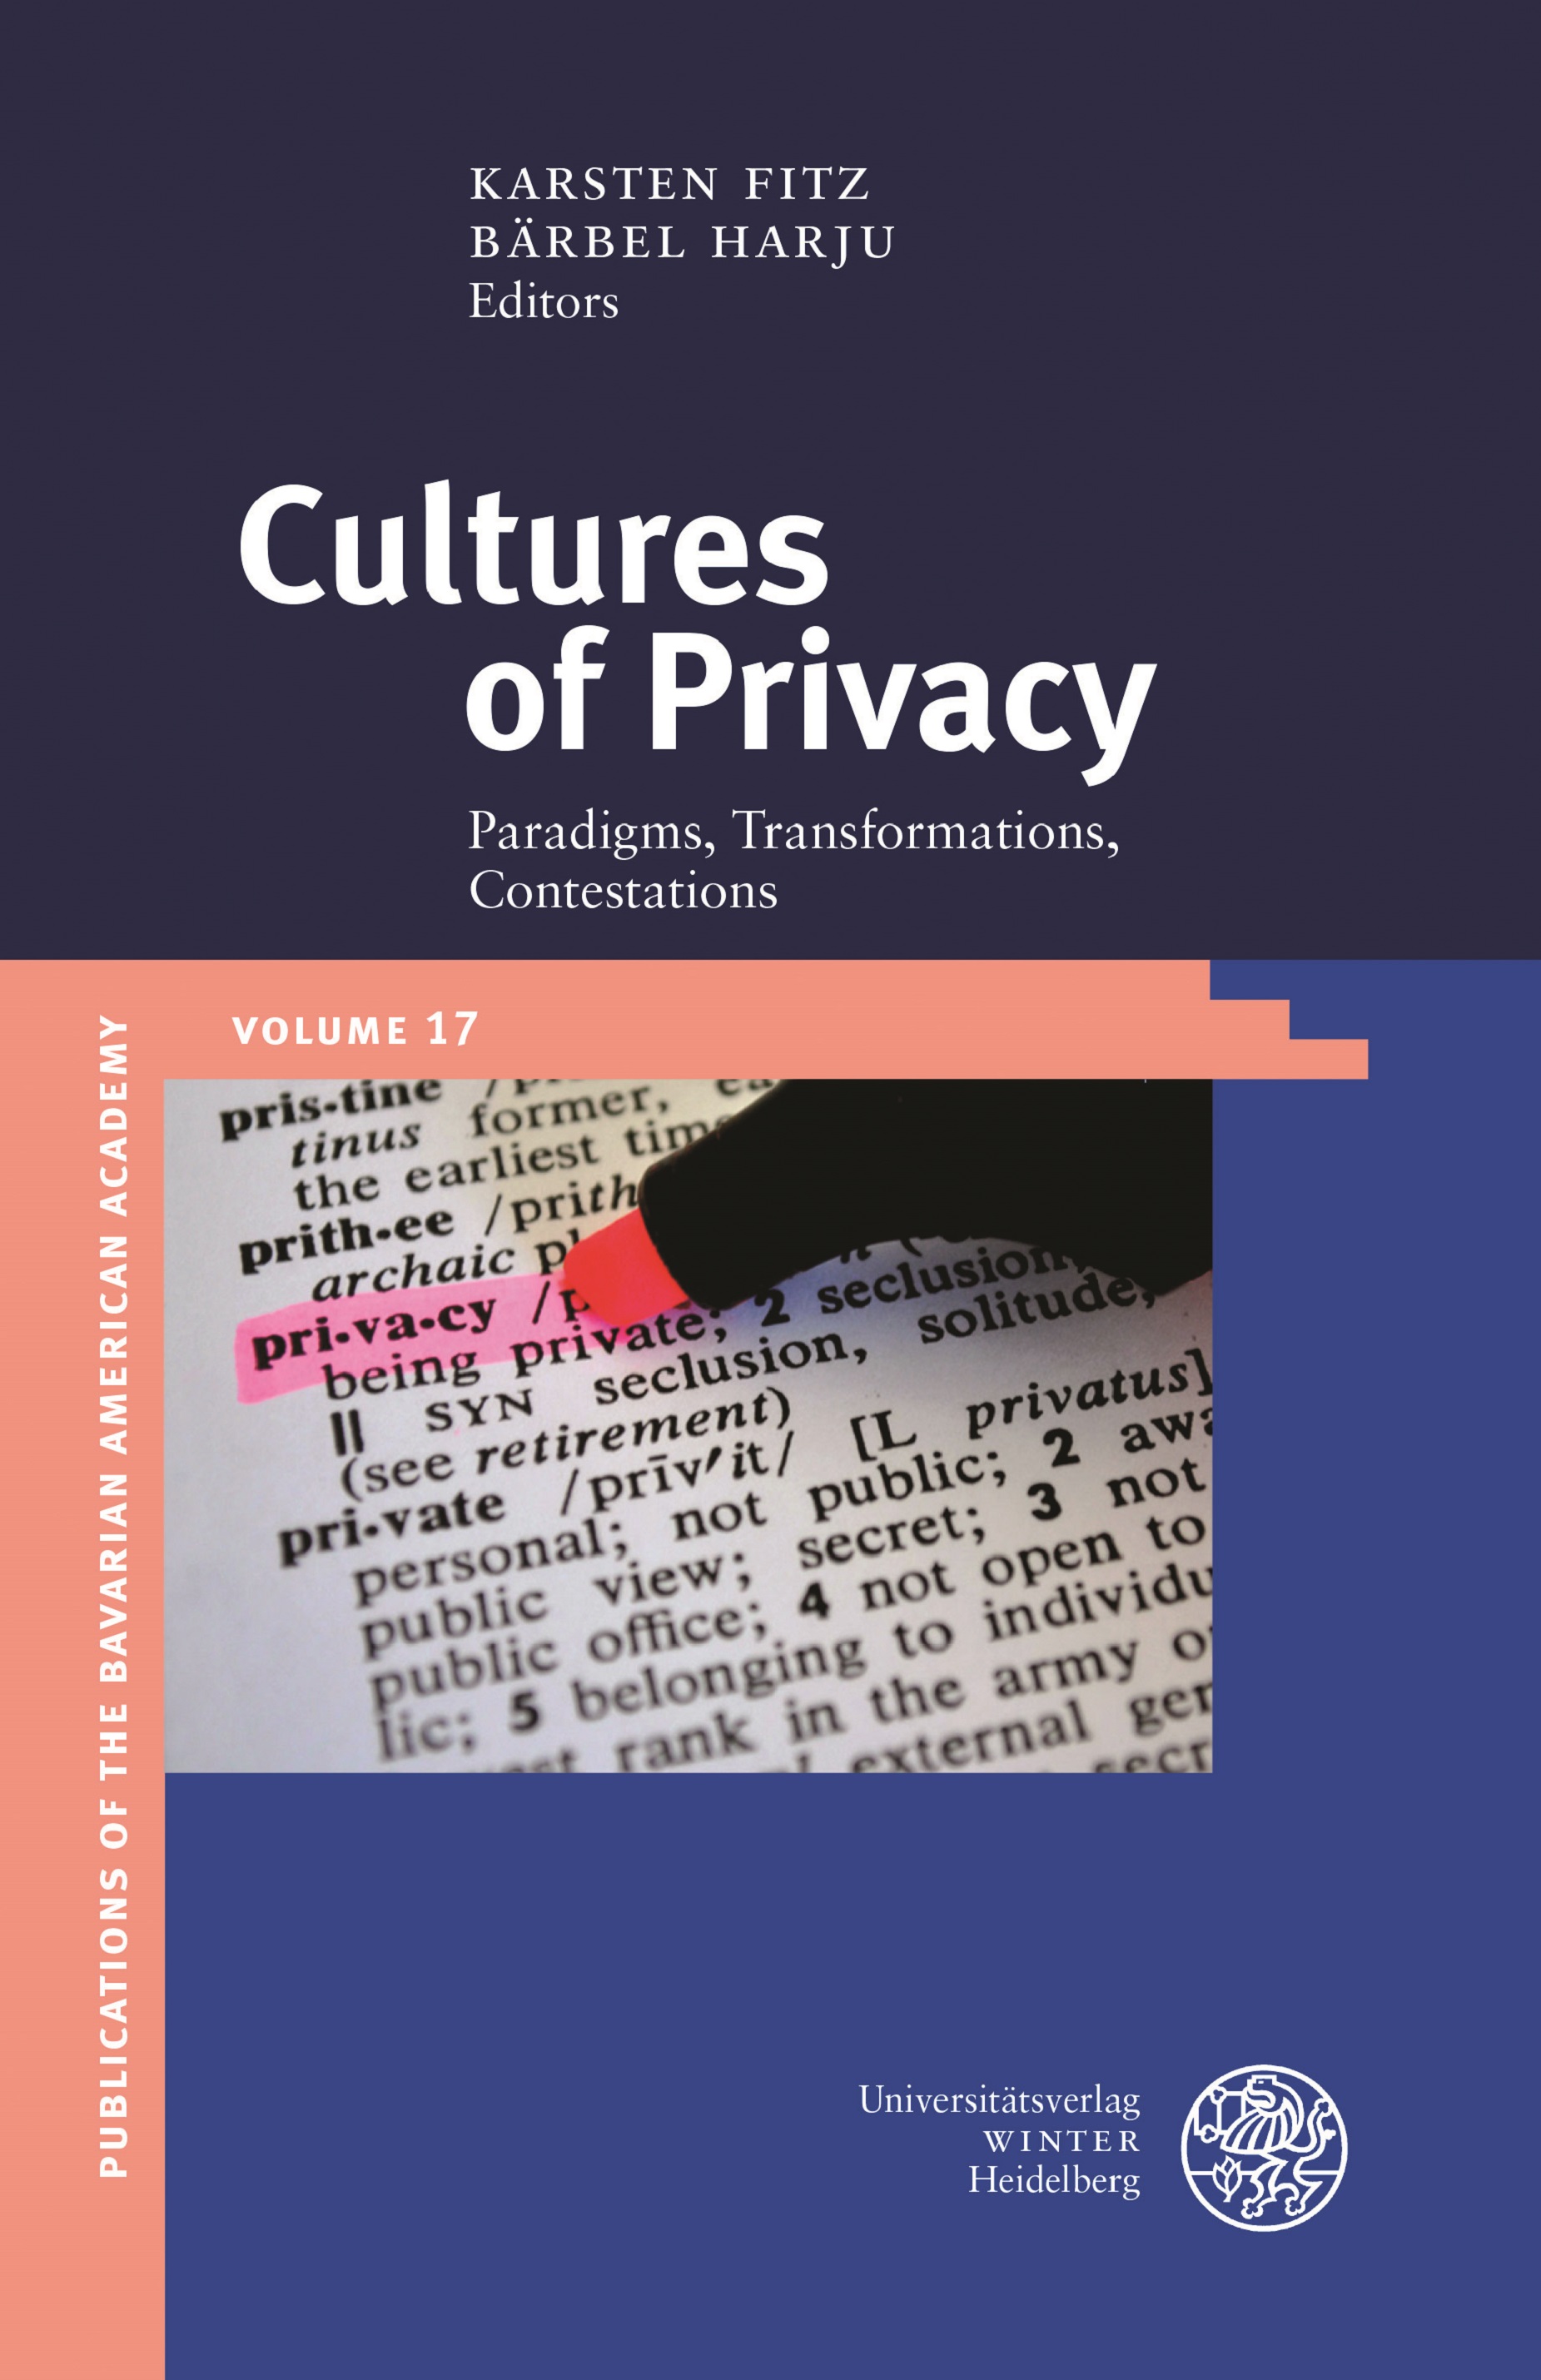 BAA publication Vol. 17 Cultures of Privacy – Paradigms, Transformations, Contestations